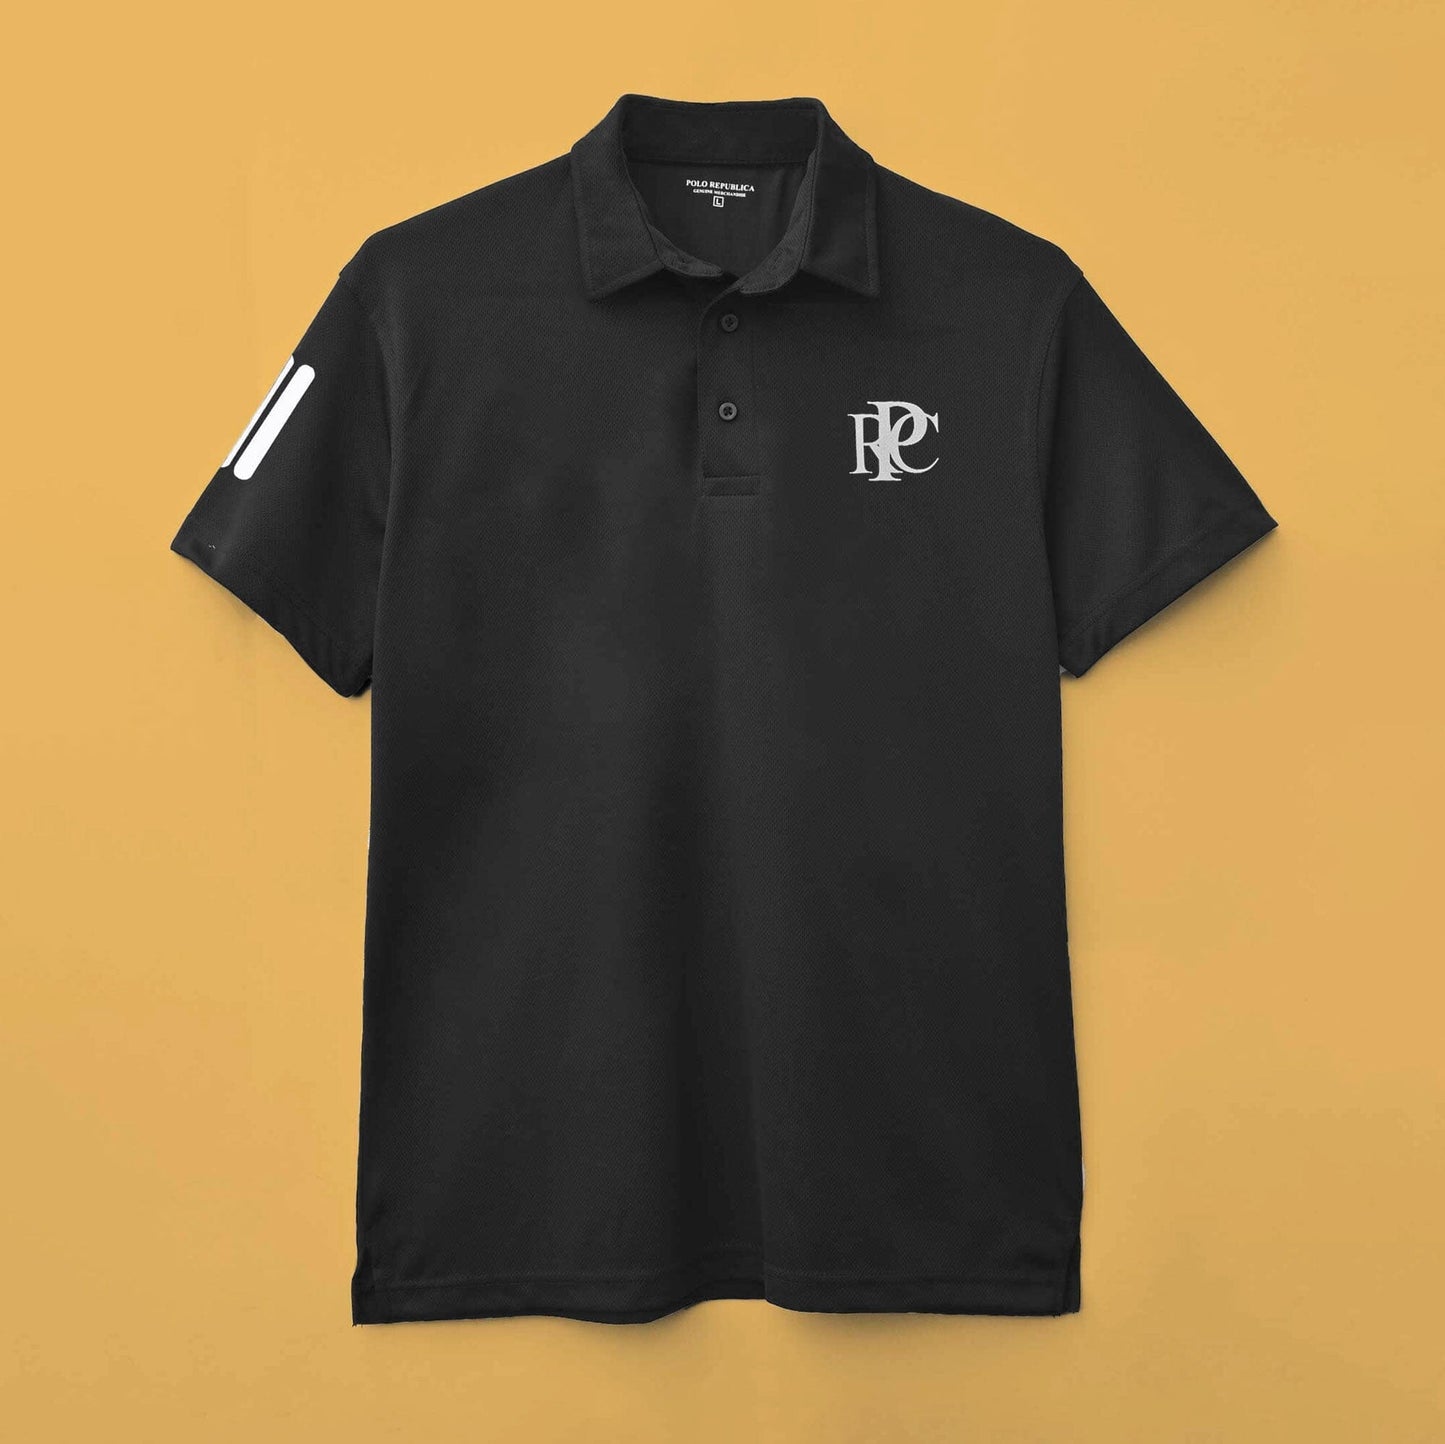 Polo Republica Men's Reflective Shoulder PRC Printed Minor Fault Activewear Polo Shirt Minor Fault Polo Republica Black XS 